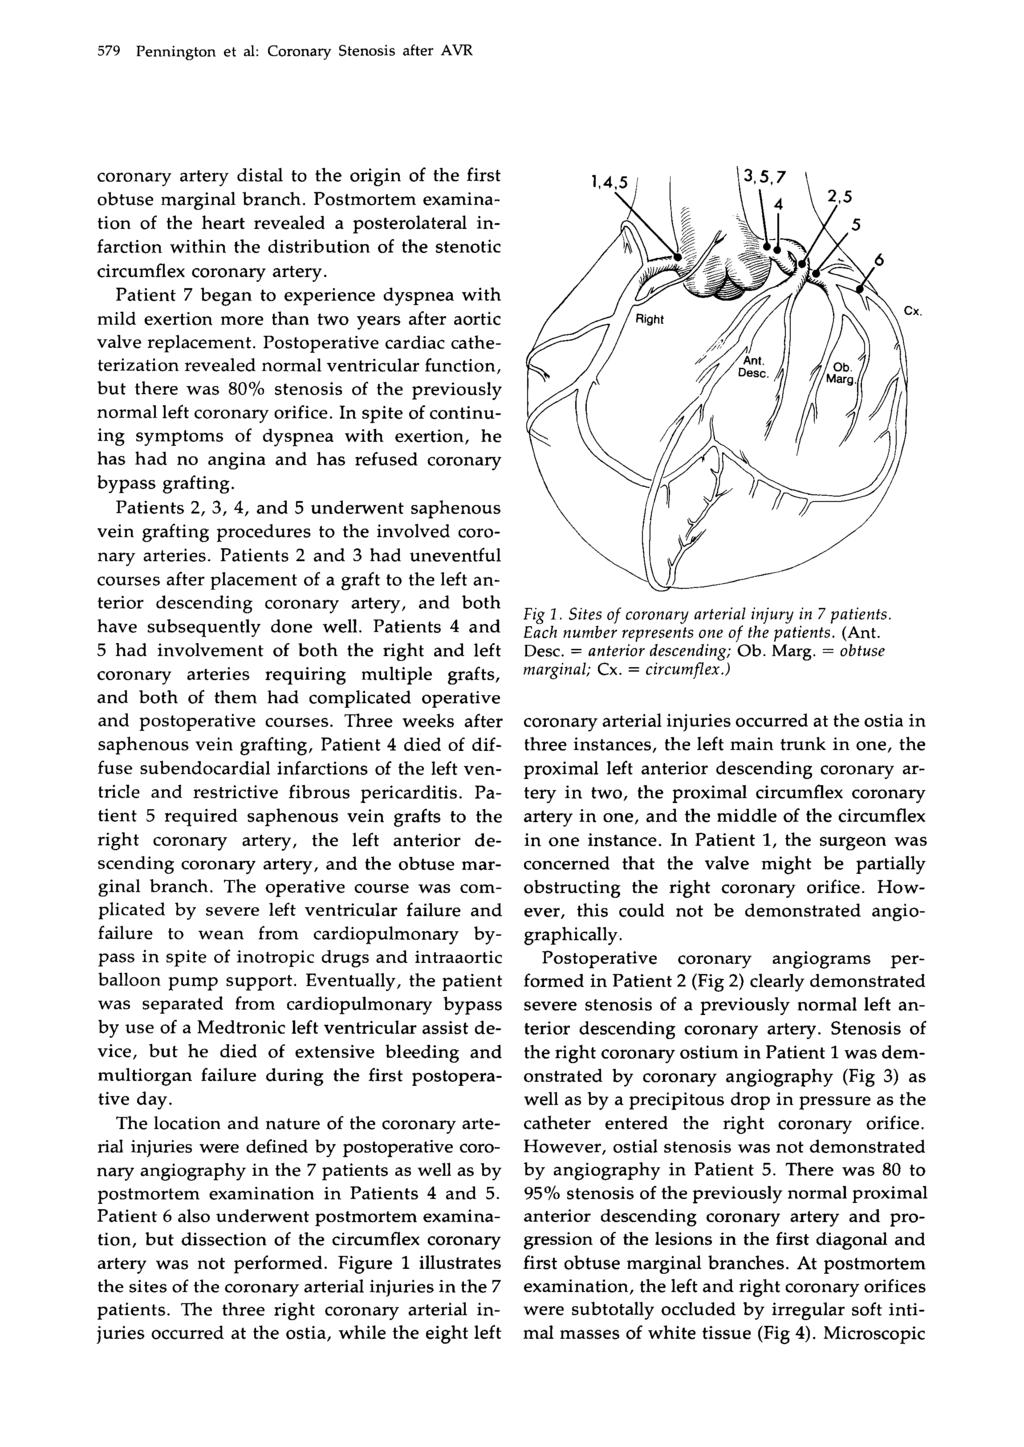 579 Pennington et al: Coronary Stenosis after AVR coronary artery distal to the origin of the first obtuse marginal branch.